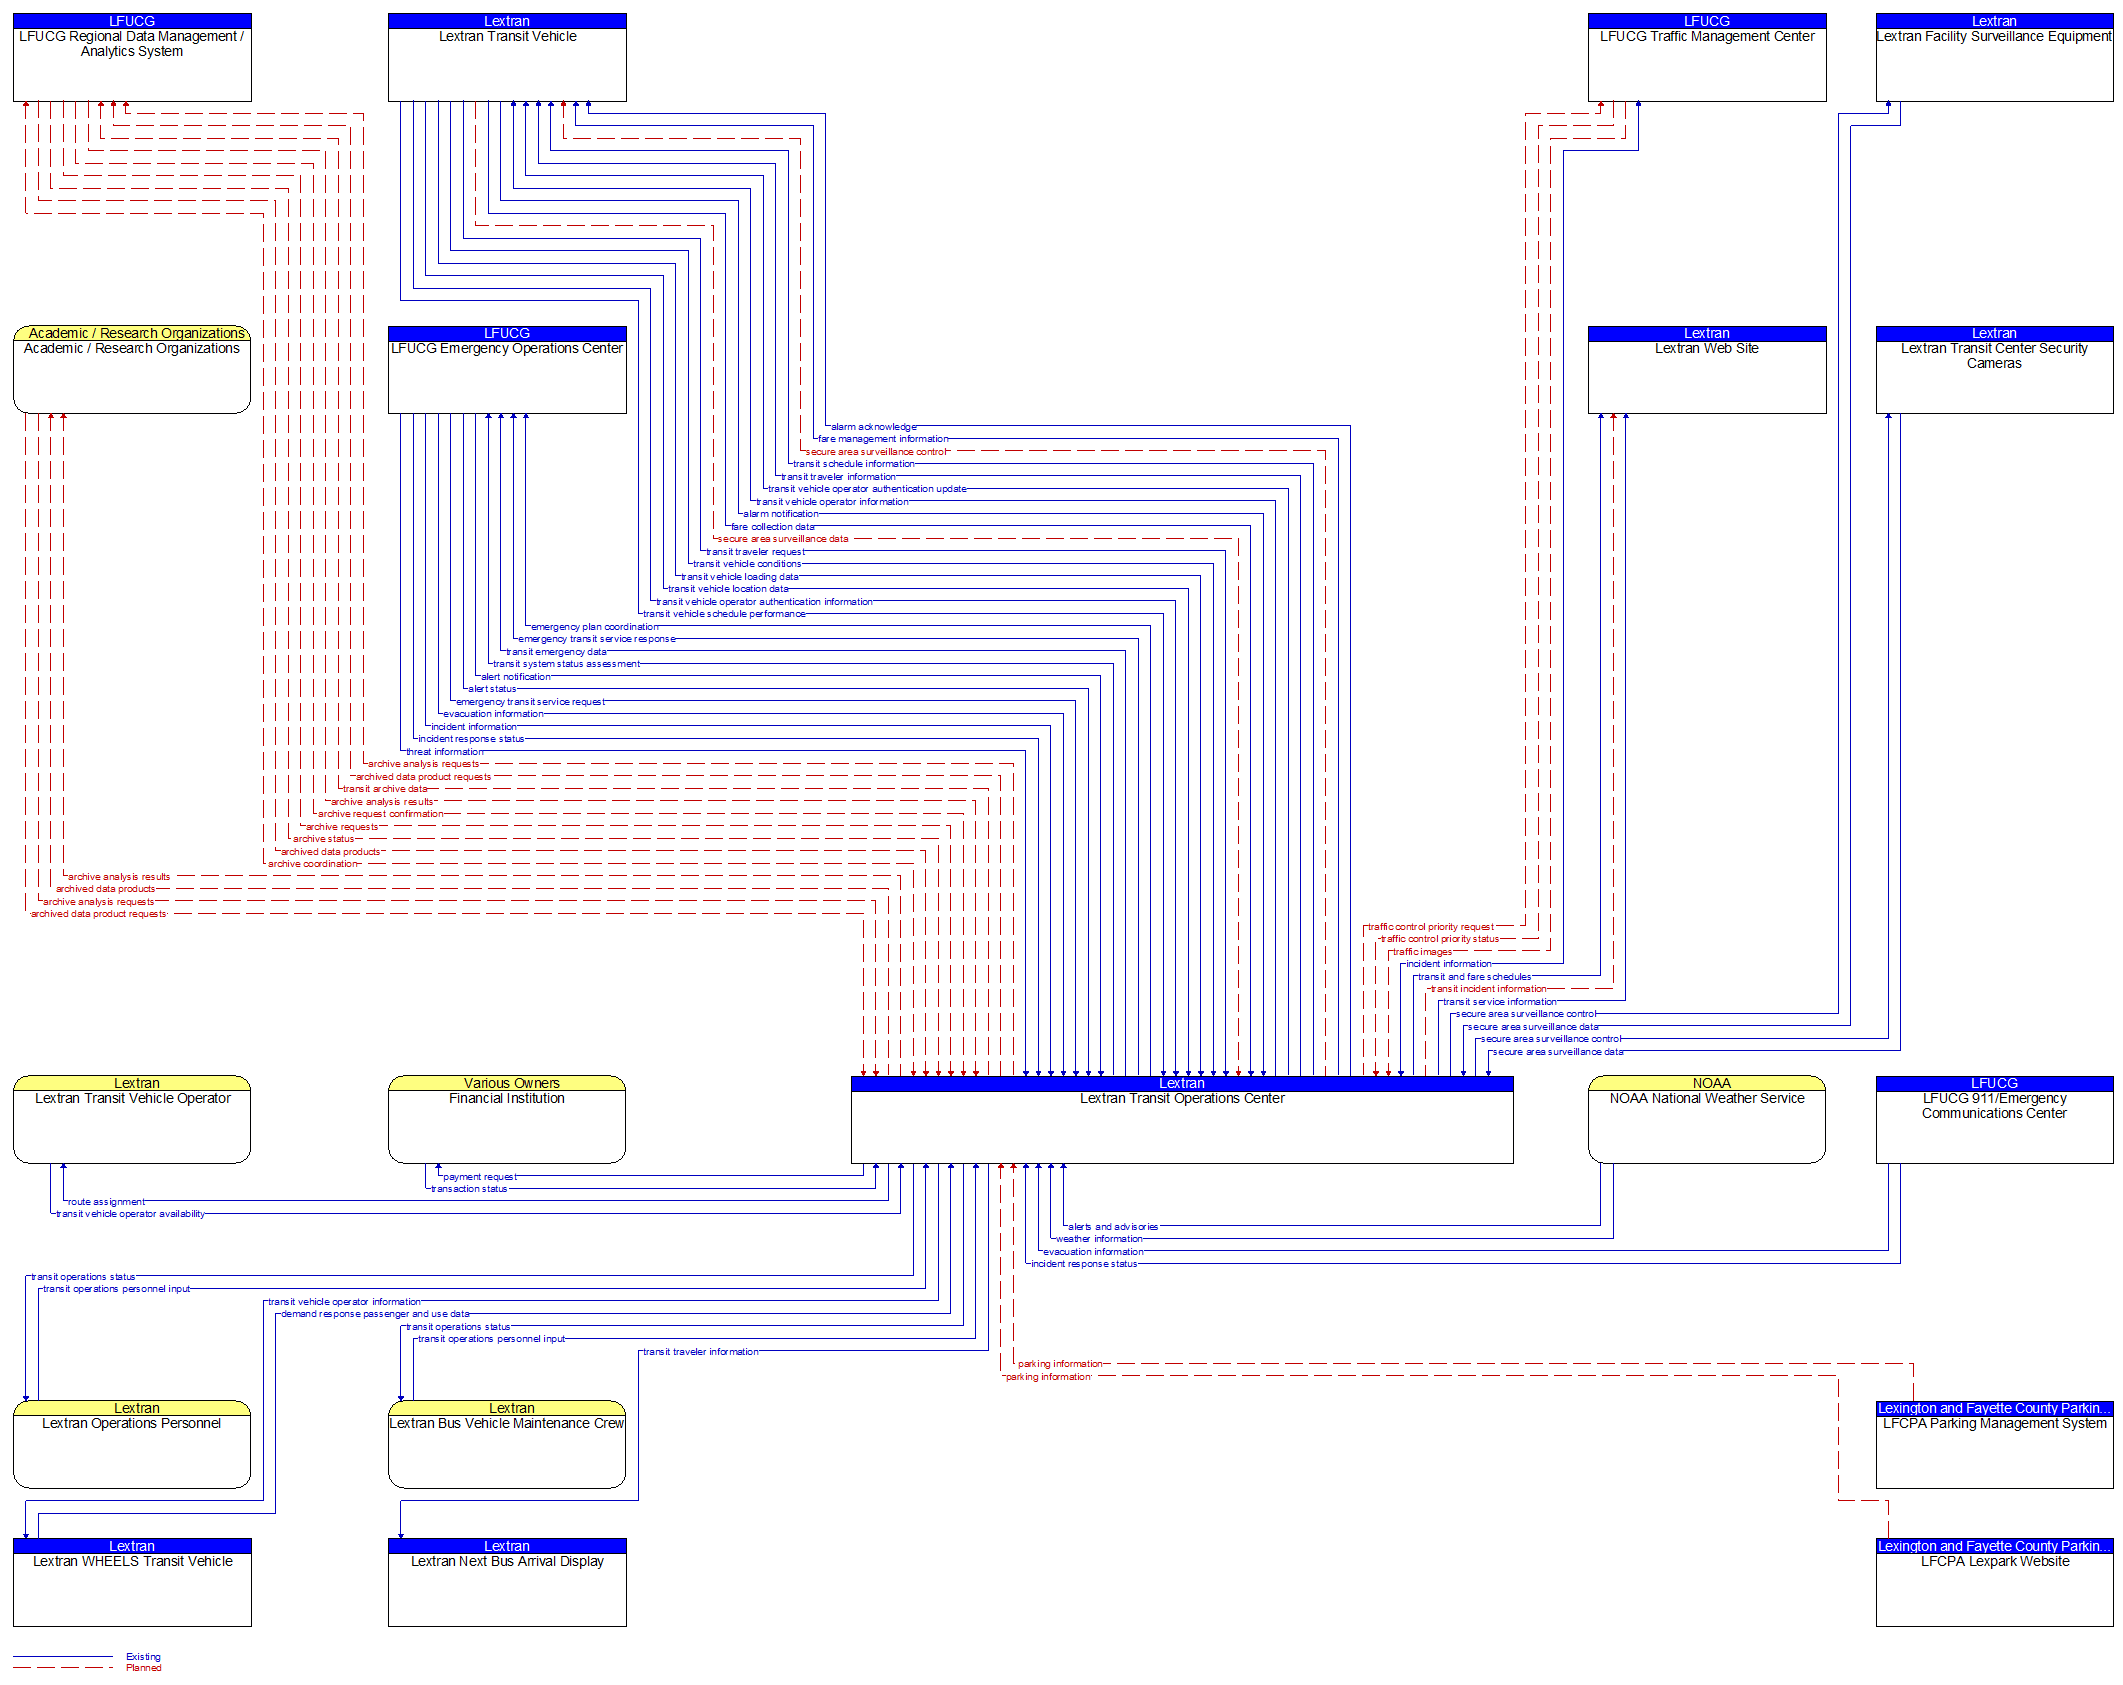 Context Diagram - Lextran Transit Operations Center